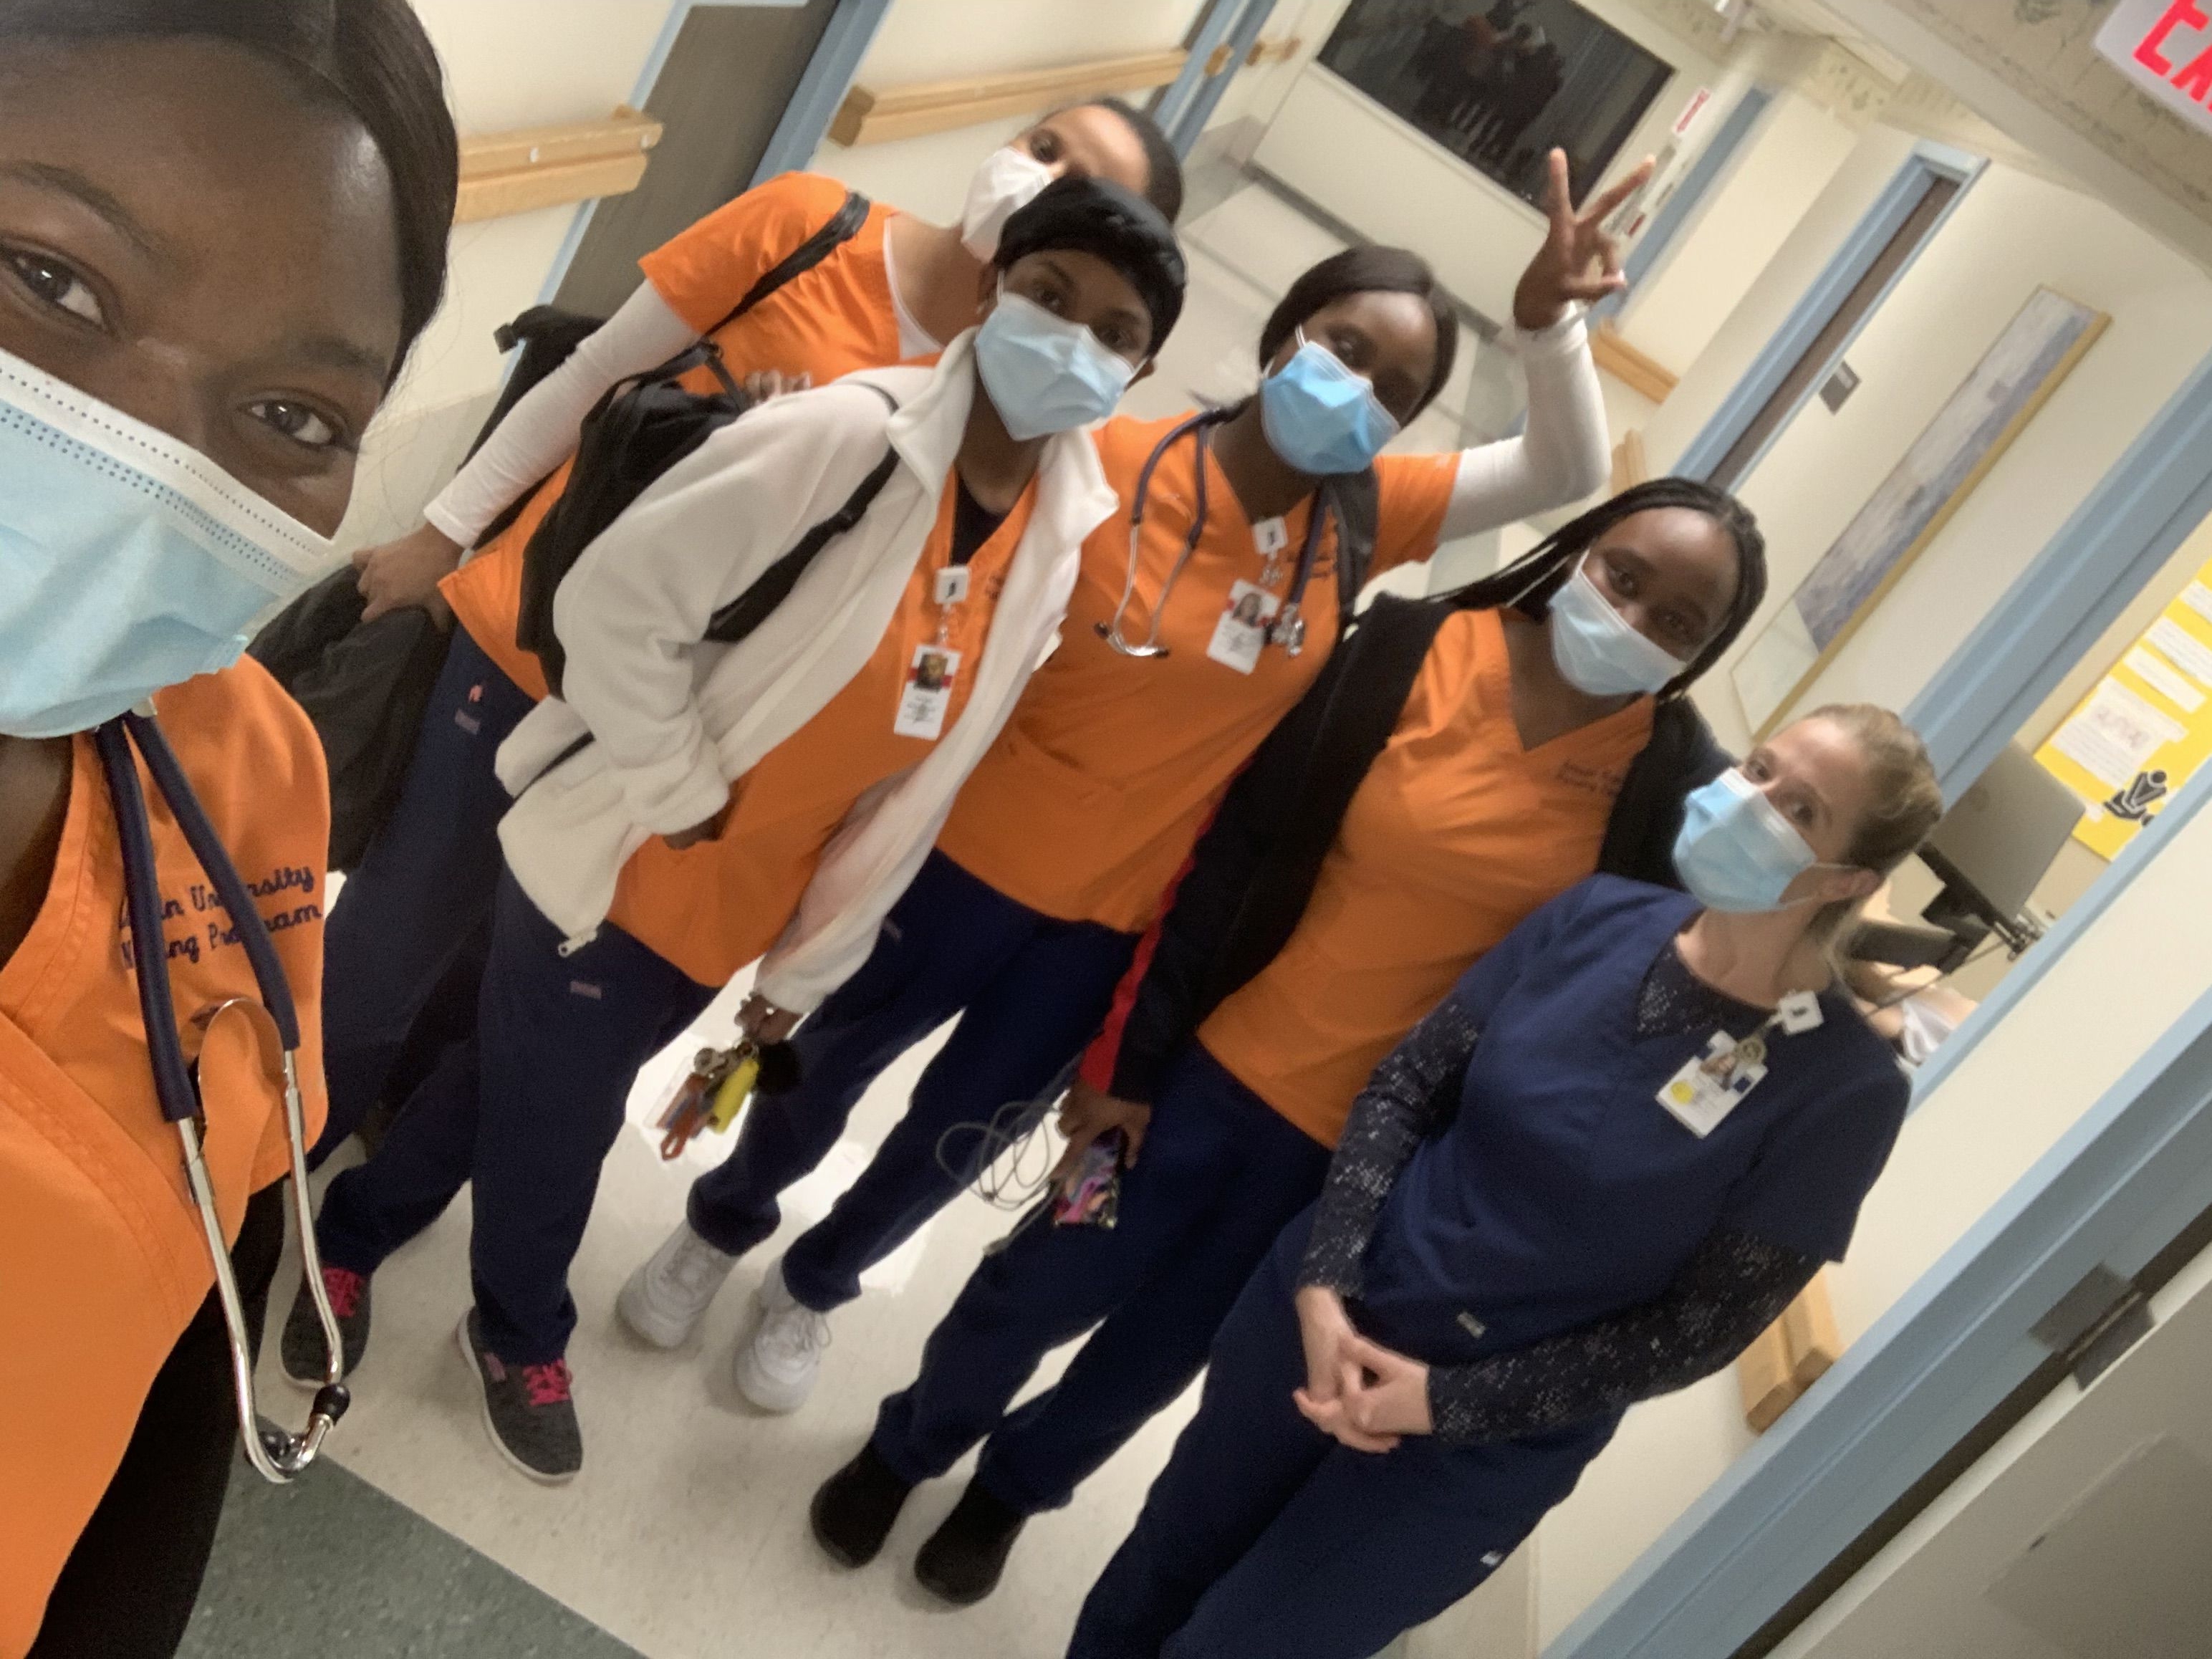 Lincoln University closes nursing program